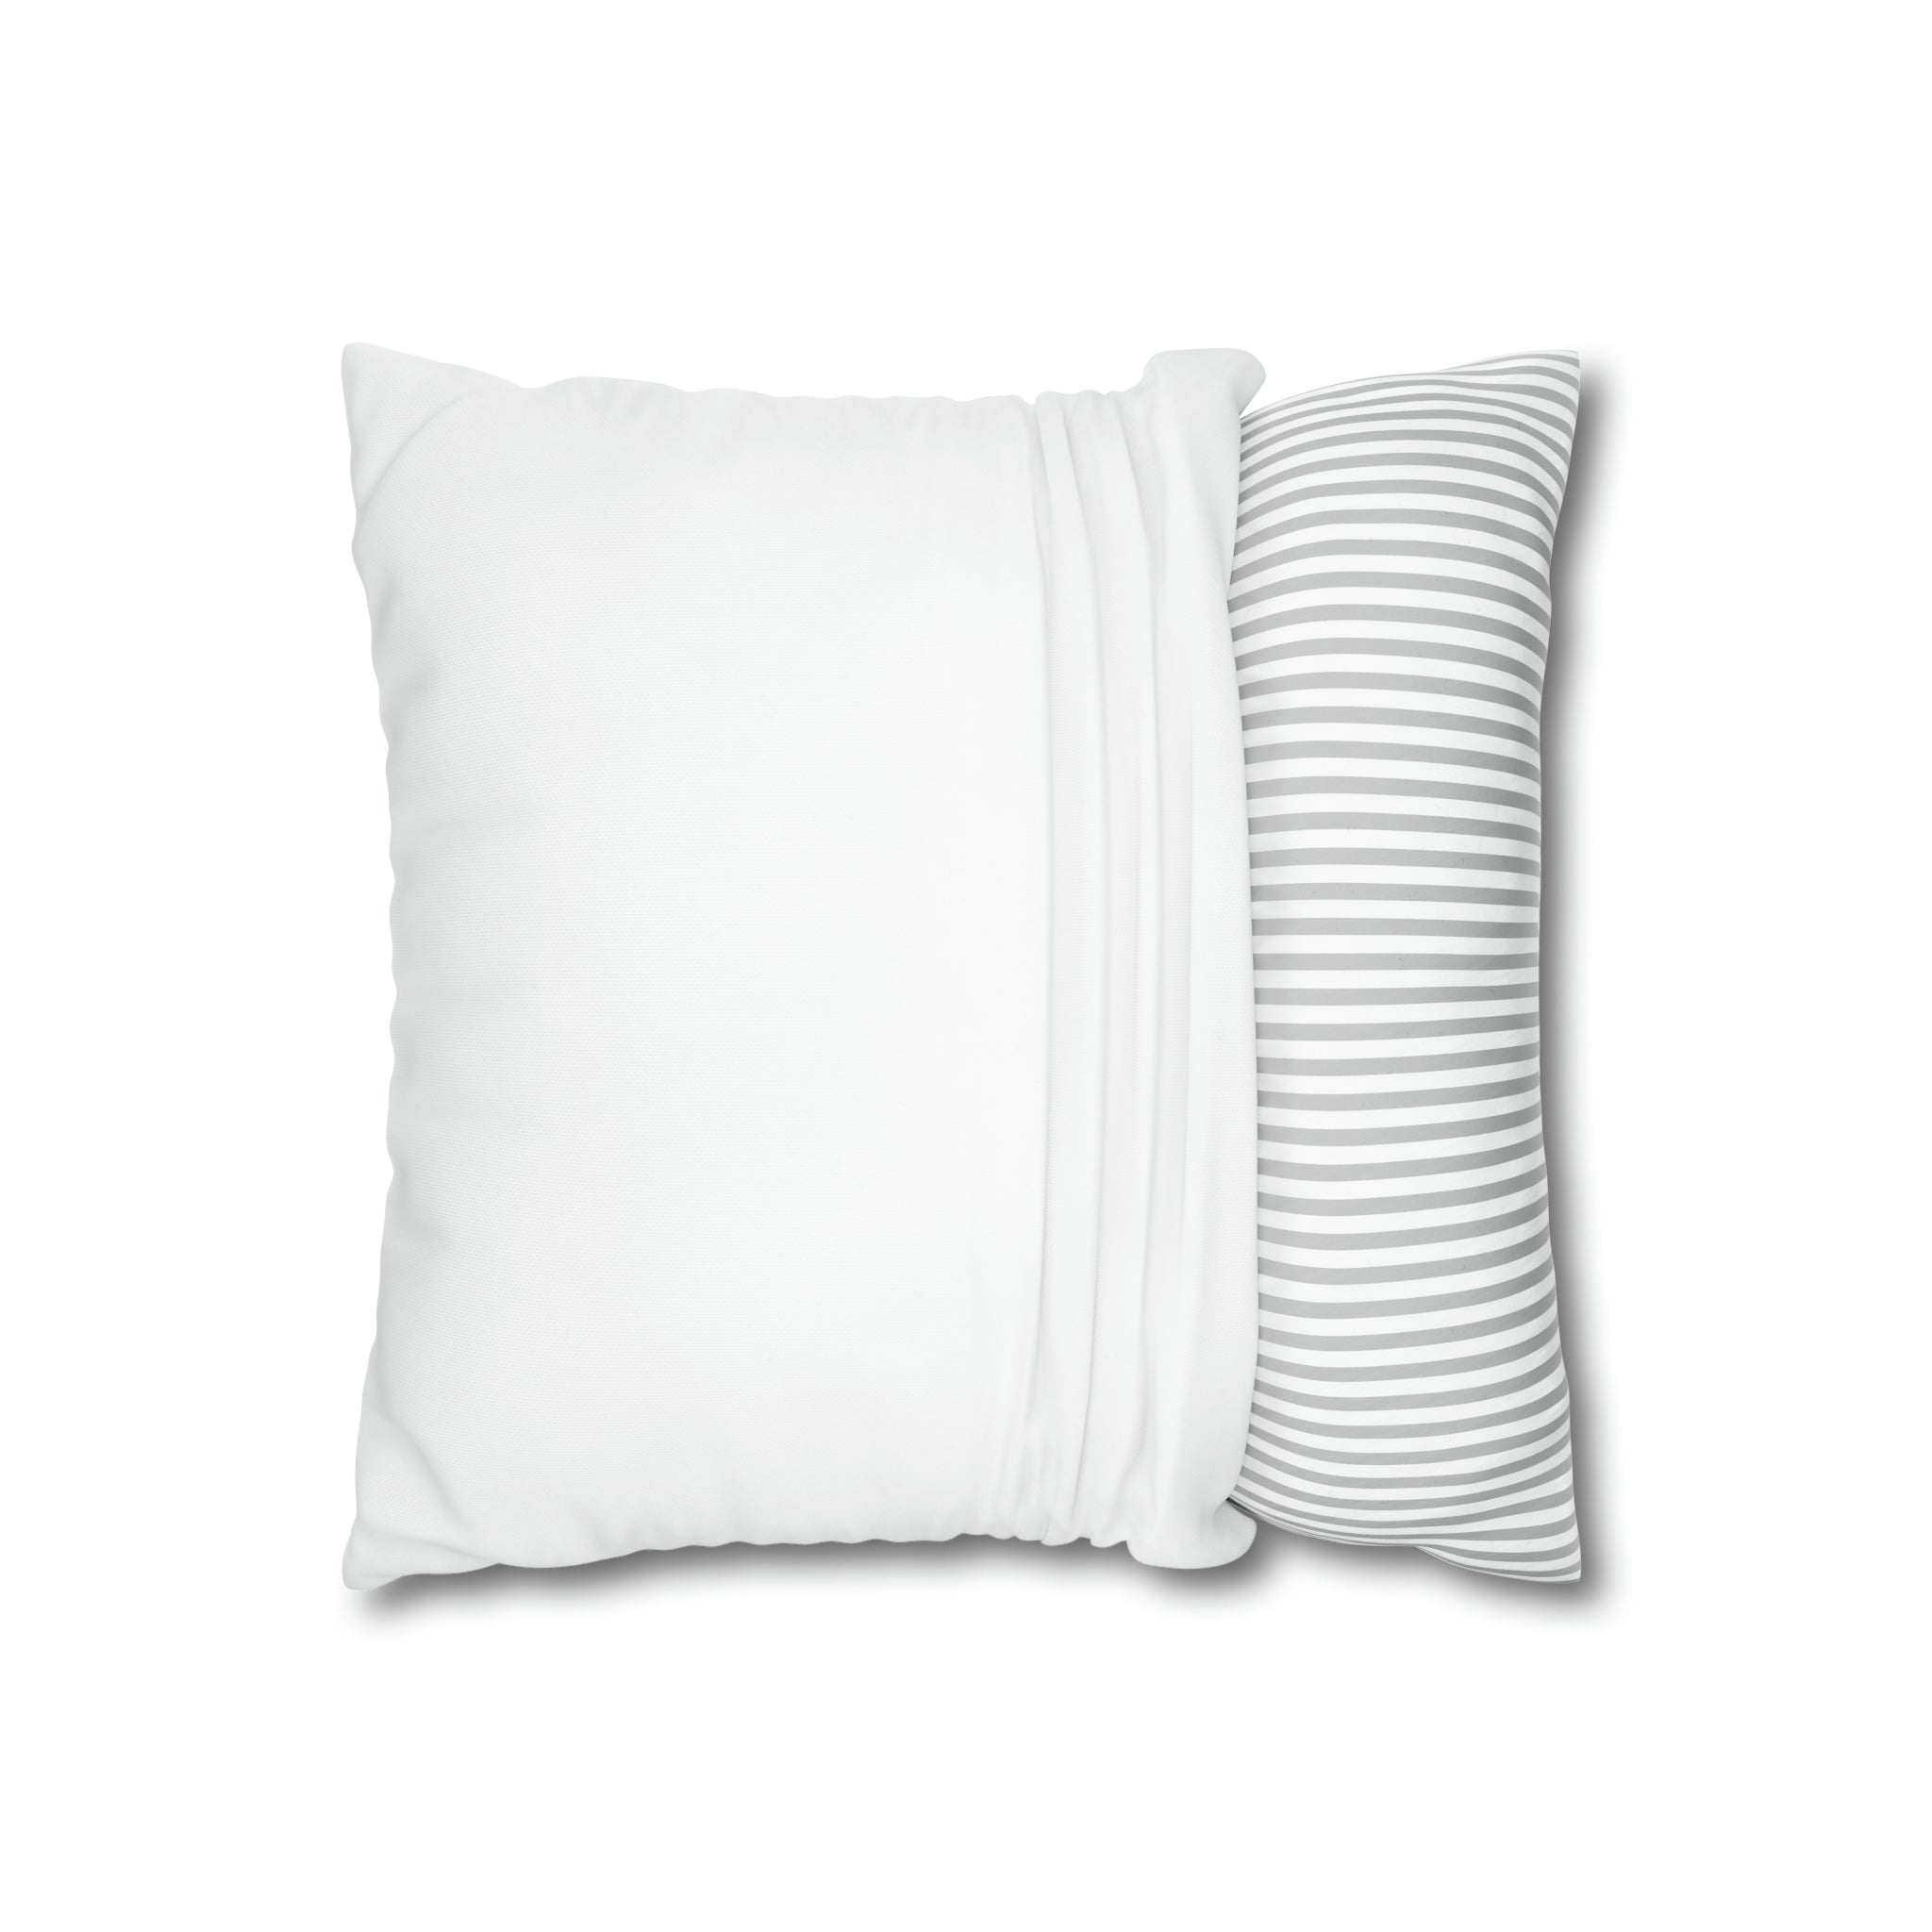 Spun Polyester Pillowcase - Infinite Pack